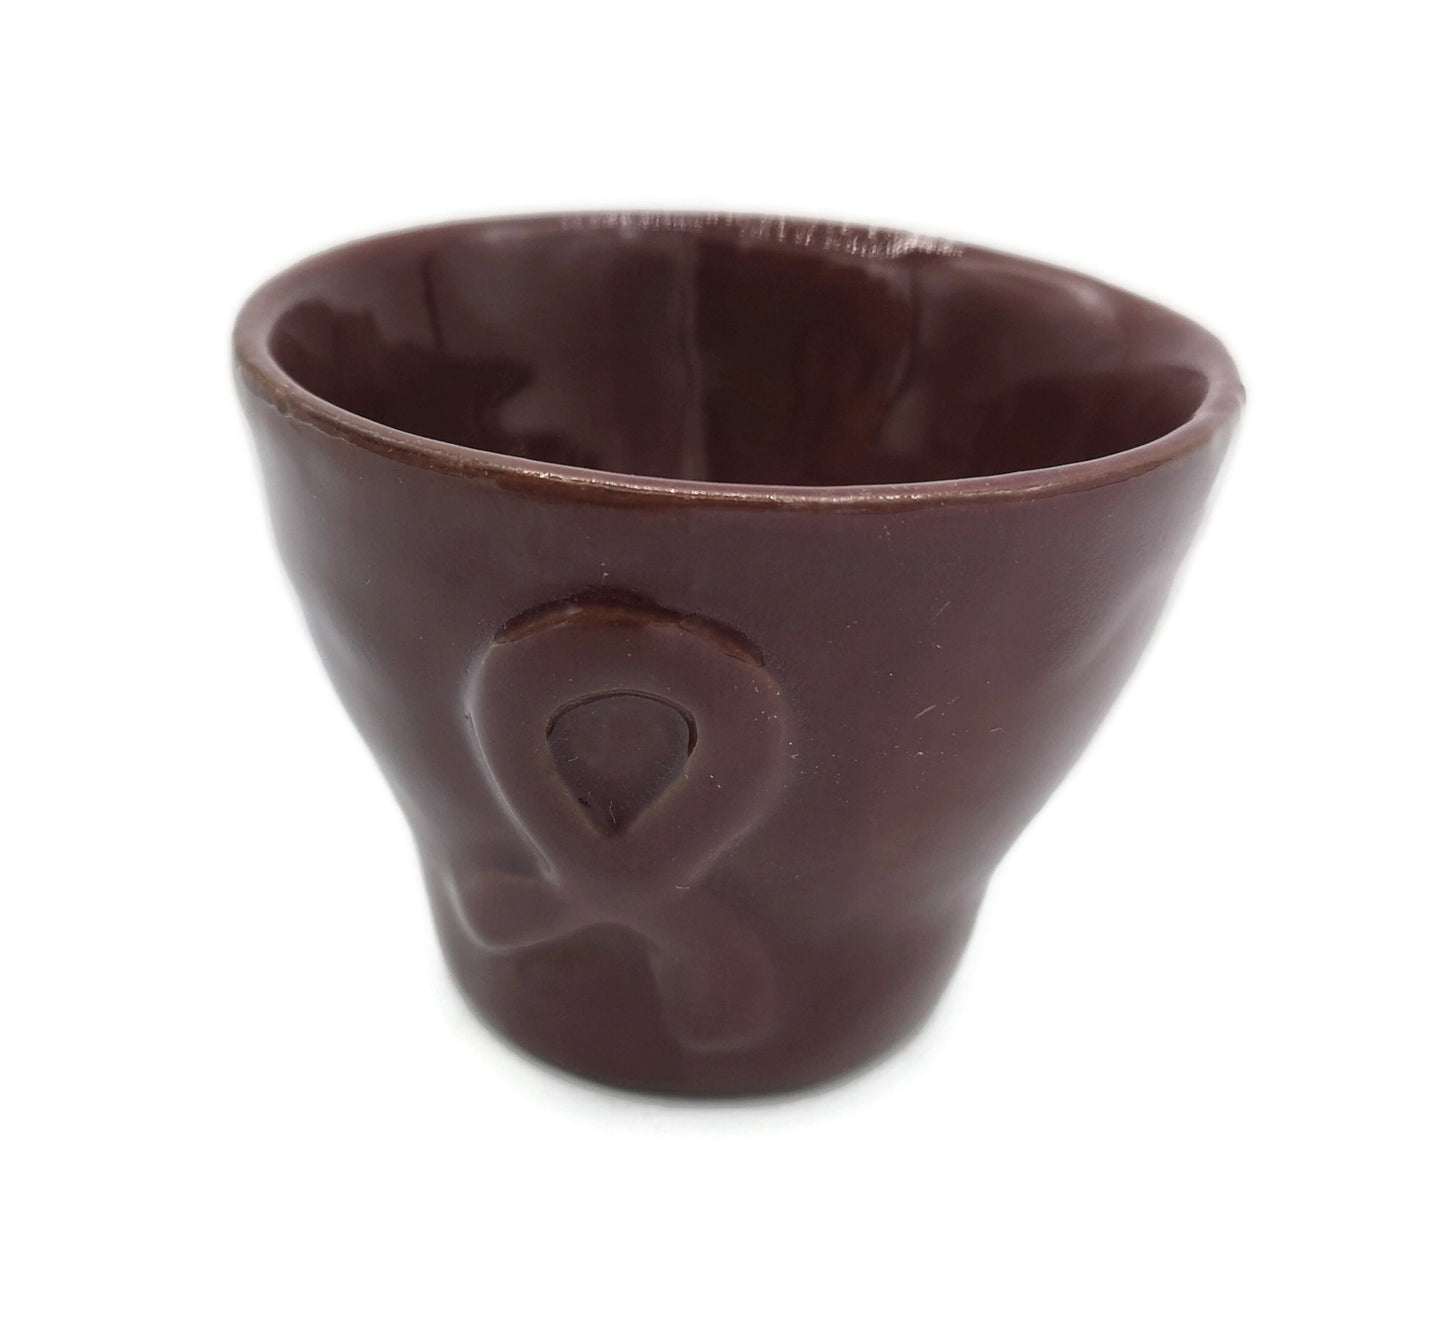 Handmade Ceramic Espresso Cup, Coffee Lovers Gift For Women, Shot Glass Mom Birthday Gift From Daughter Trending Now, Stocking Stuffers - Ceramica Ana Rafael